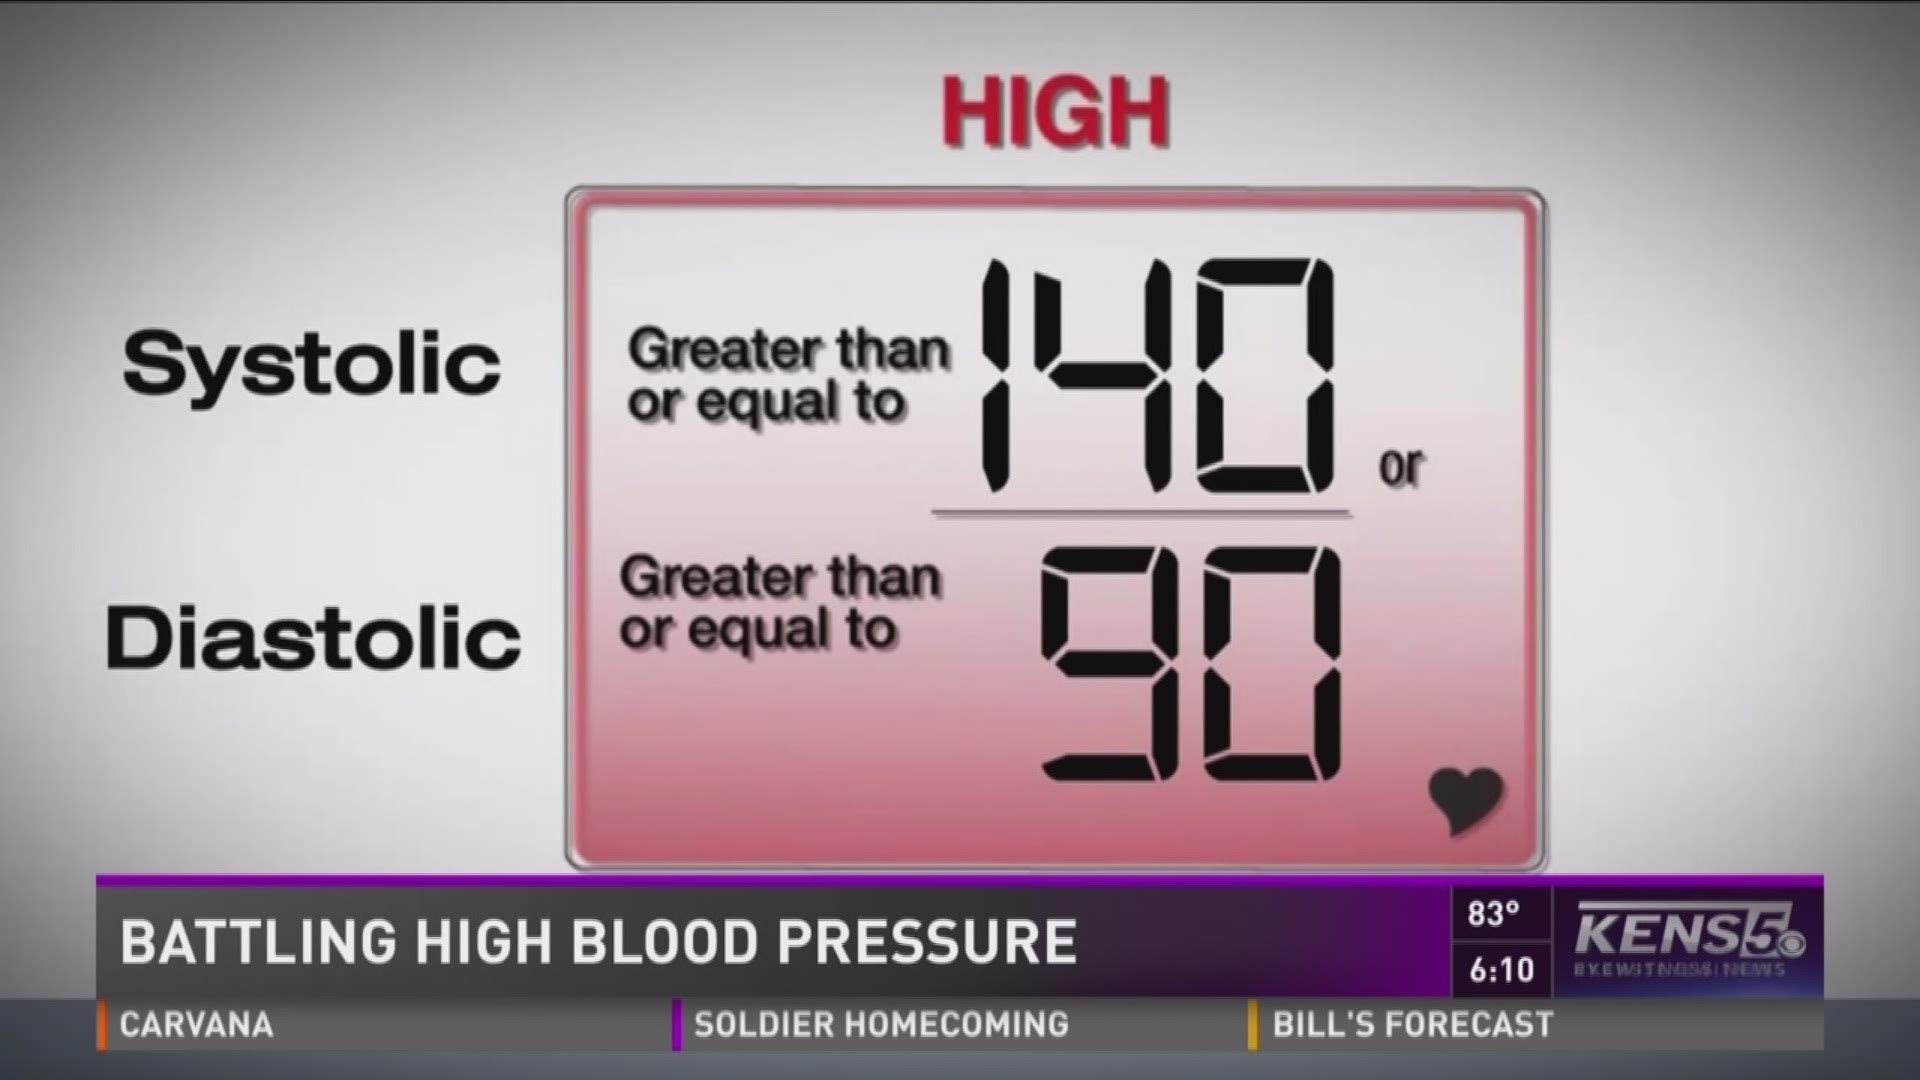 Real Men Wear Gowns: Battling high blood pressure